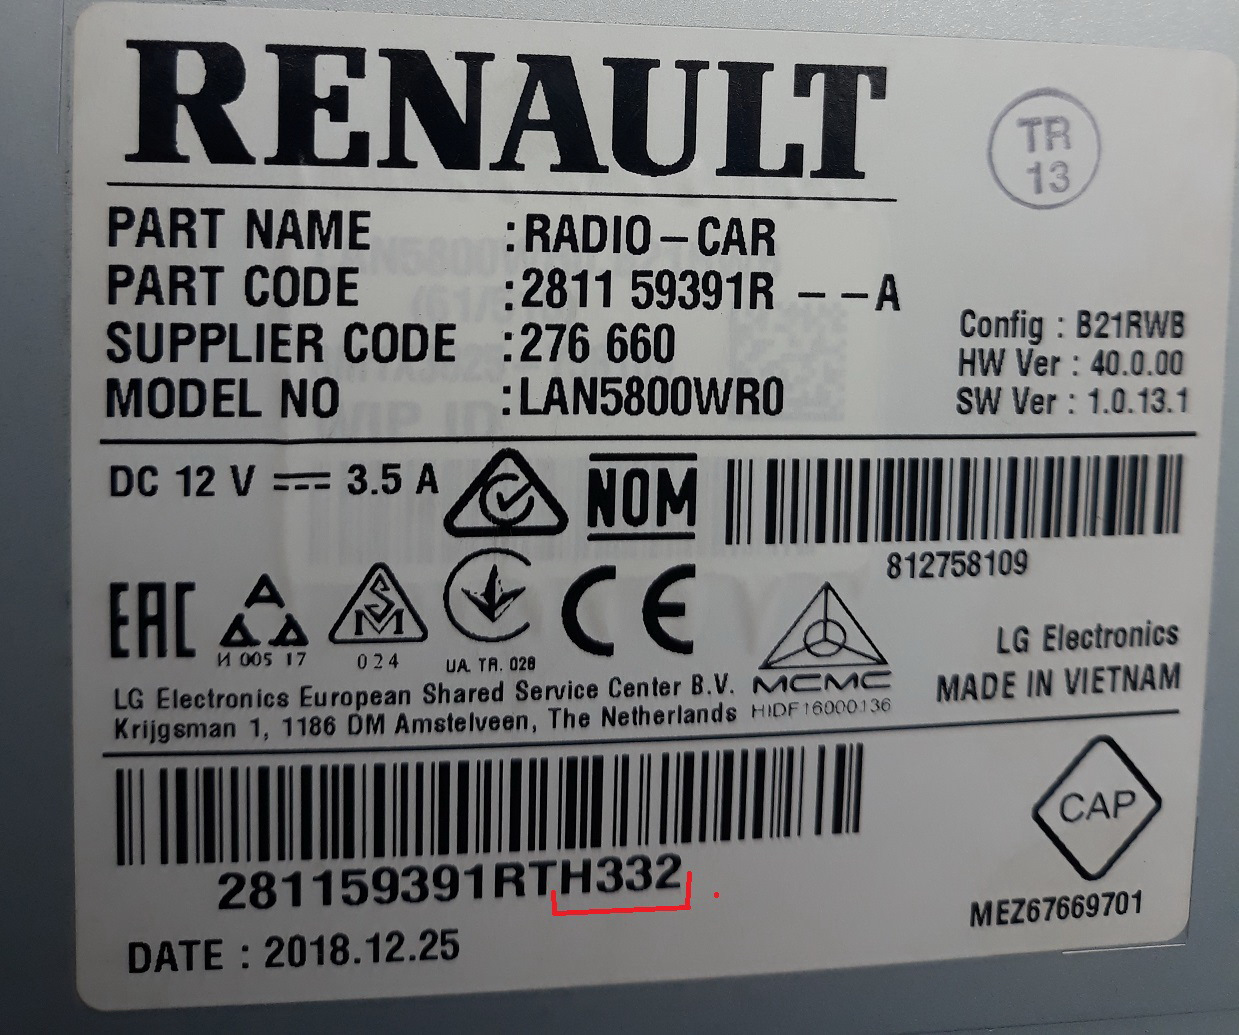 Renault code